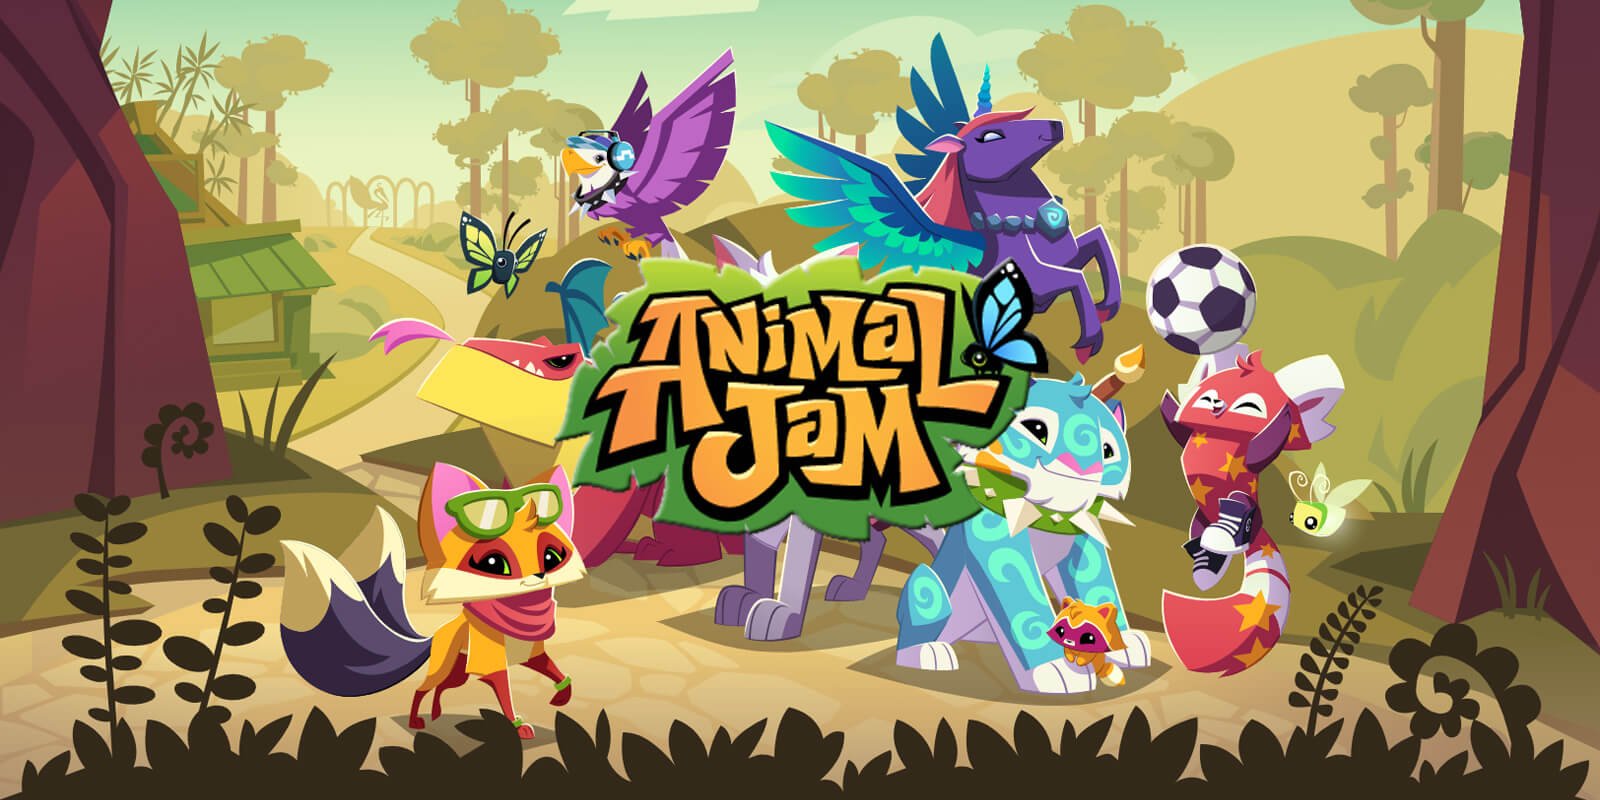 Animal Jam kids' virtual world hit by data breach, impacts 46M accounts